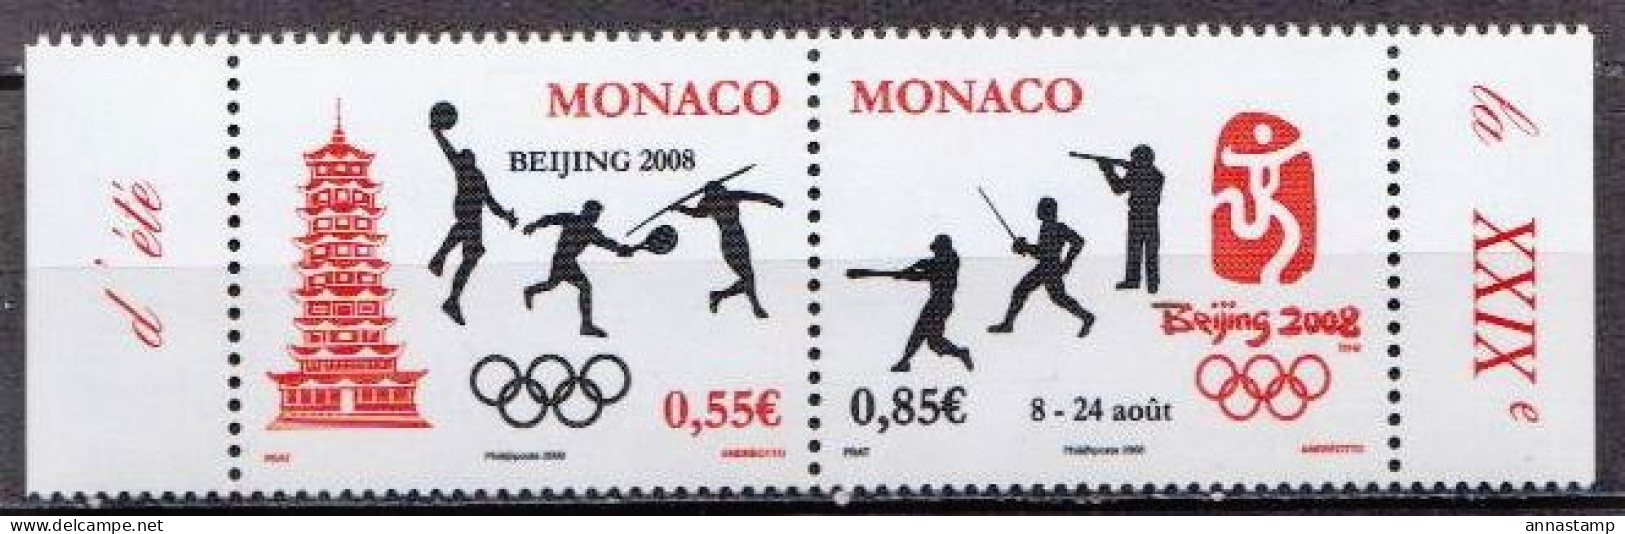 Monaco MNH Set - Summer 2008: Beijing